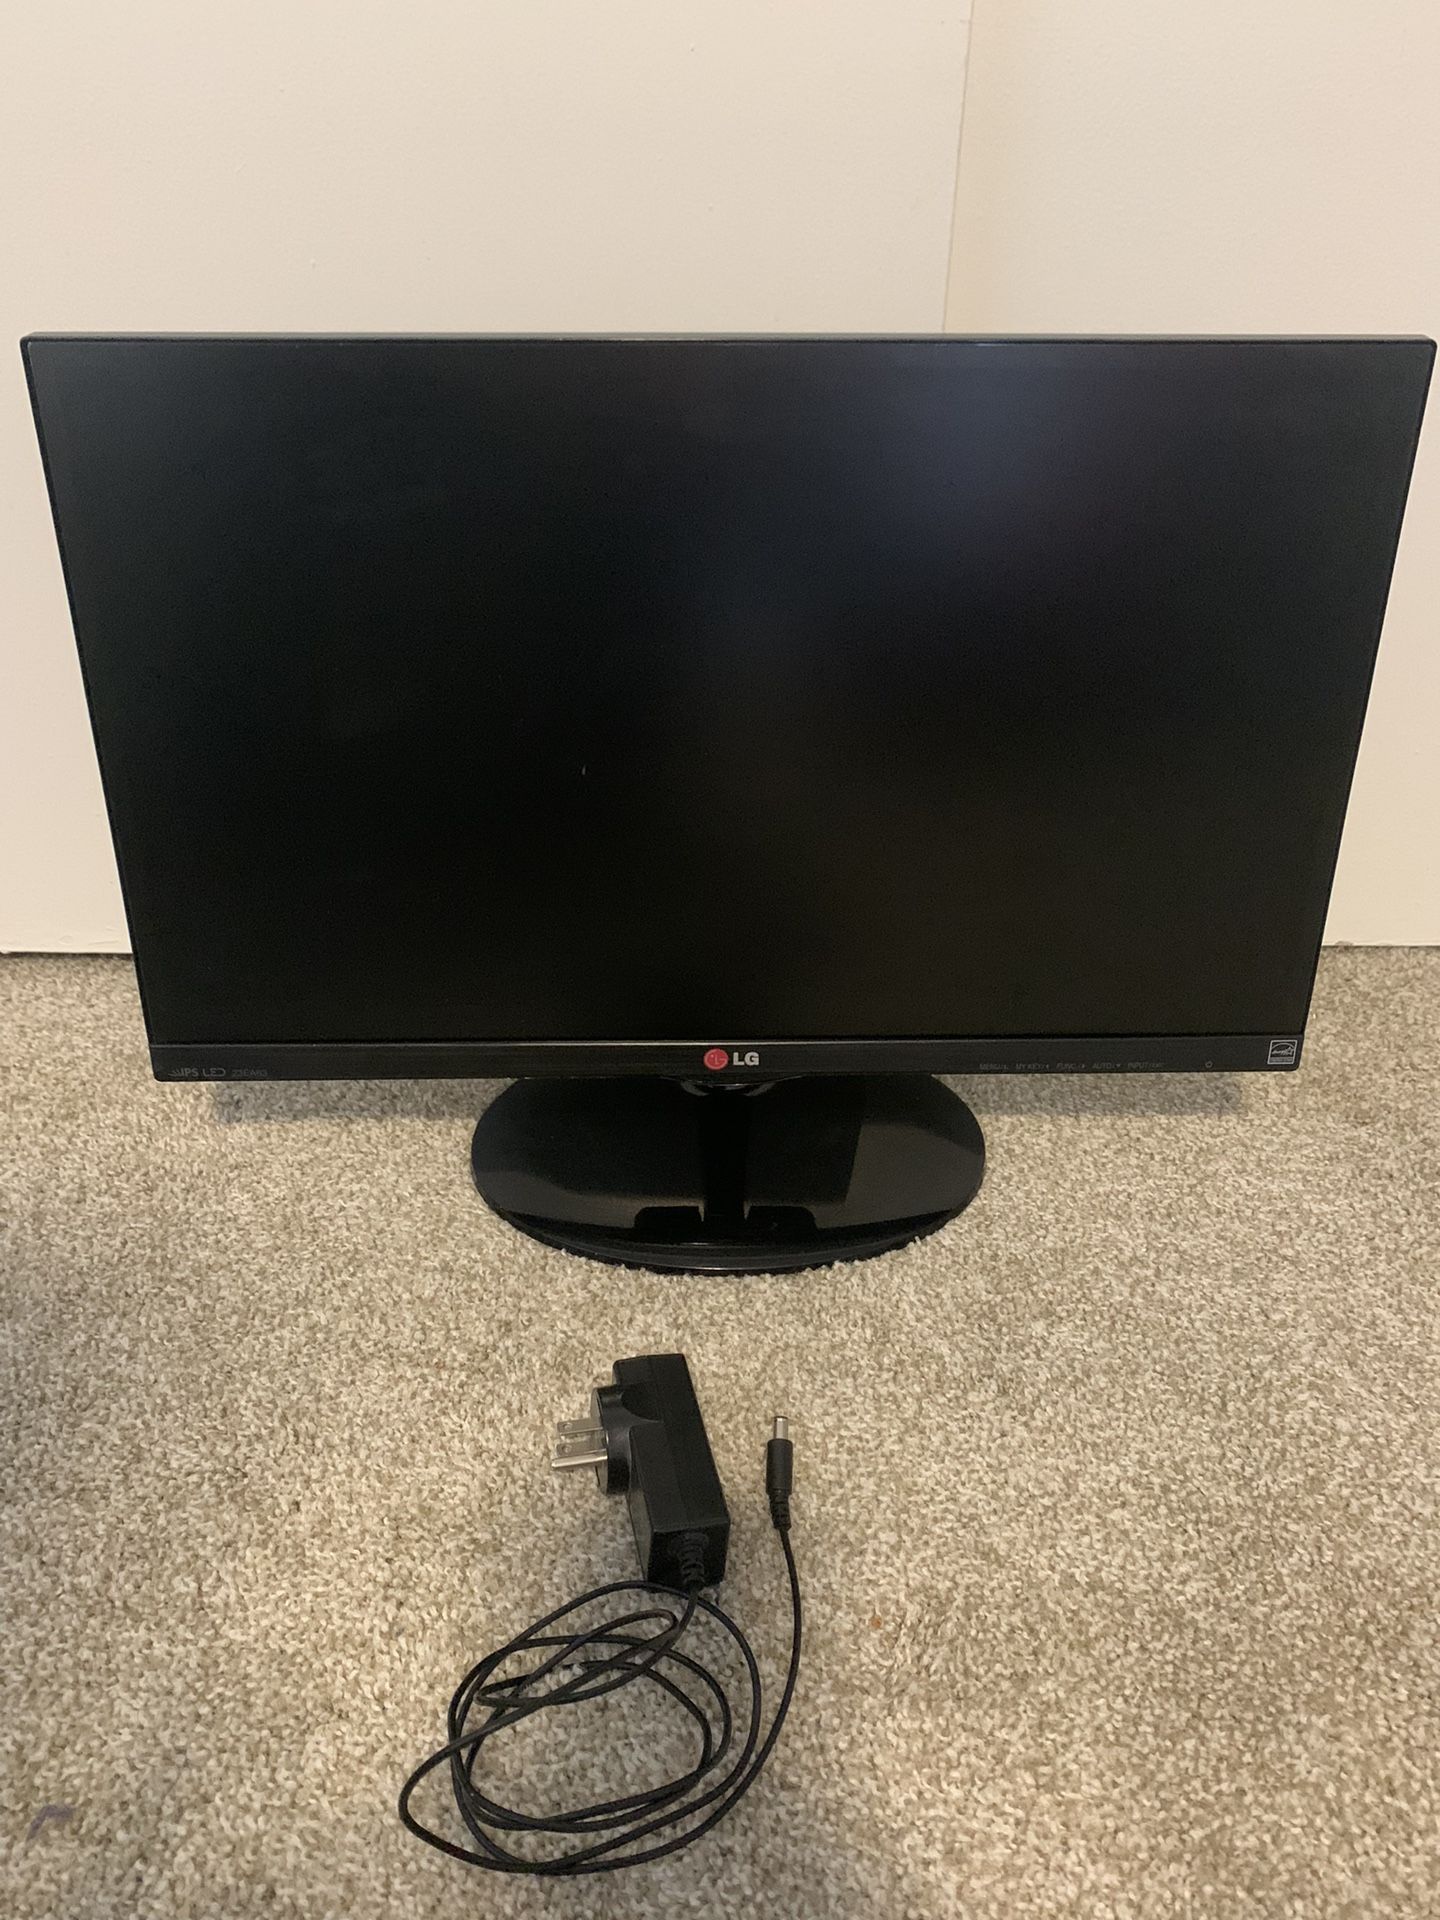 24” LG PC monitor